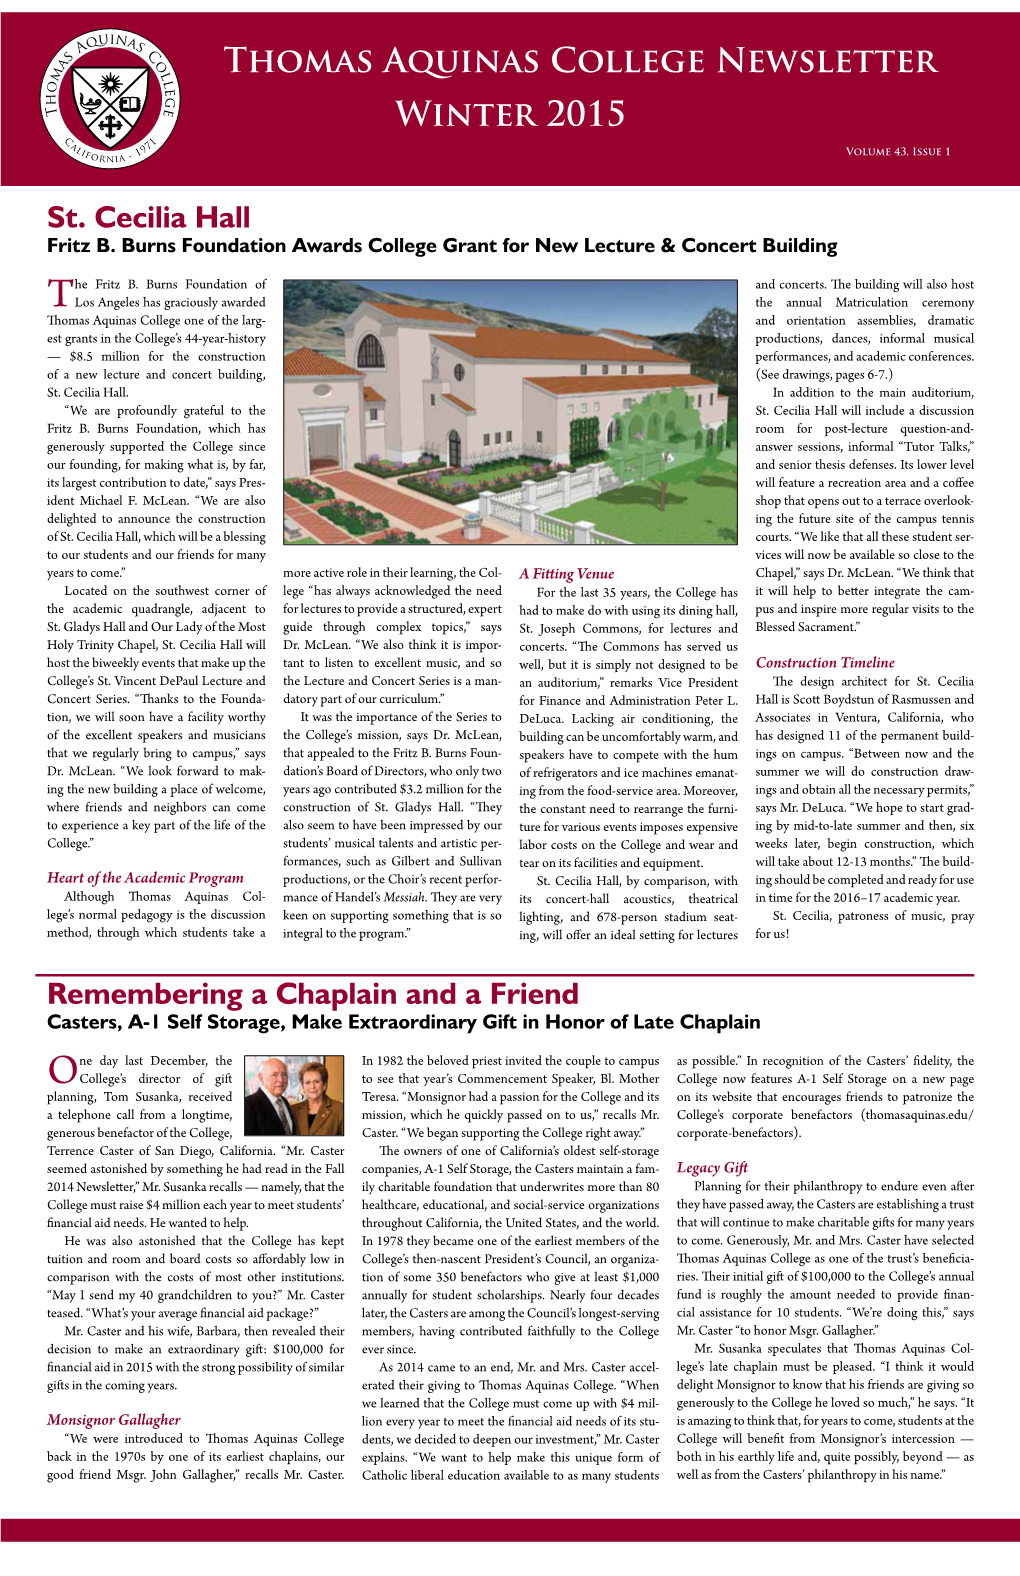 Thomas Aquinas College Newsletter Winter 2015